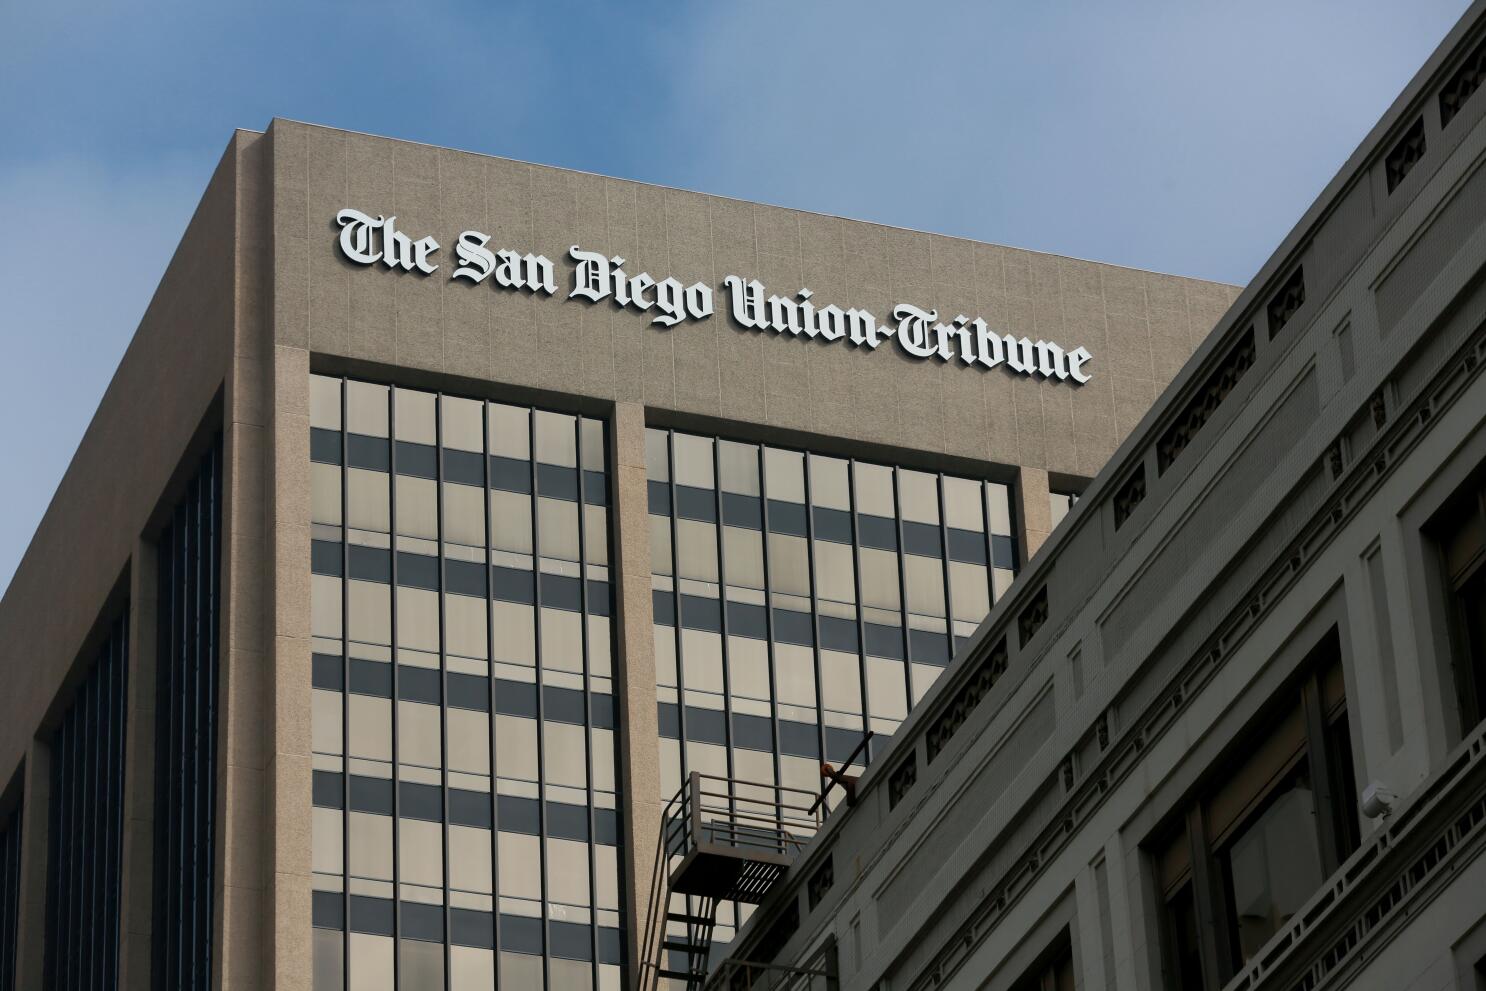 Column: Moneyball not what it seems - The San Diego Union-Tribune